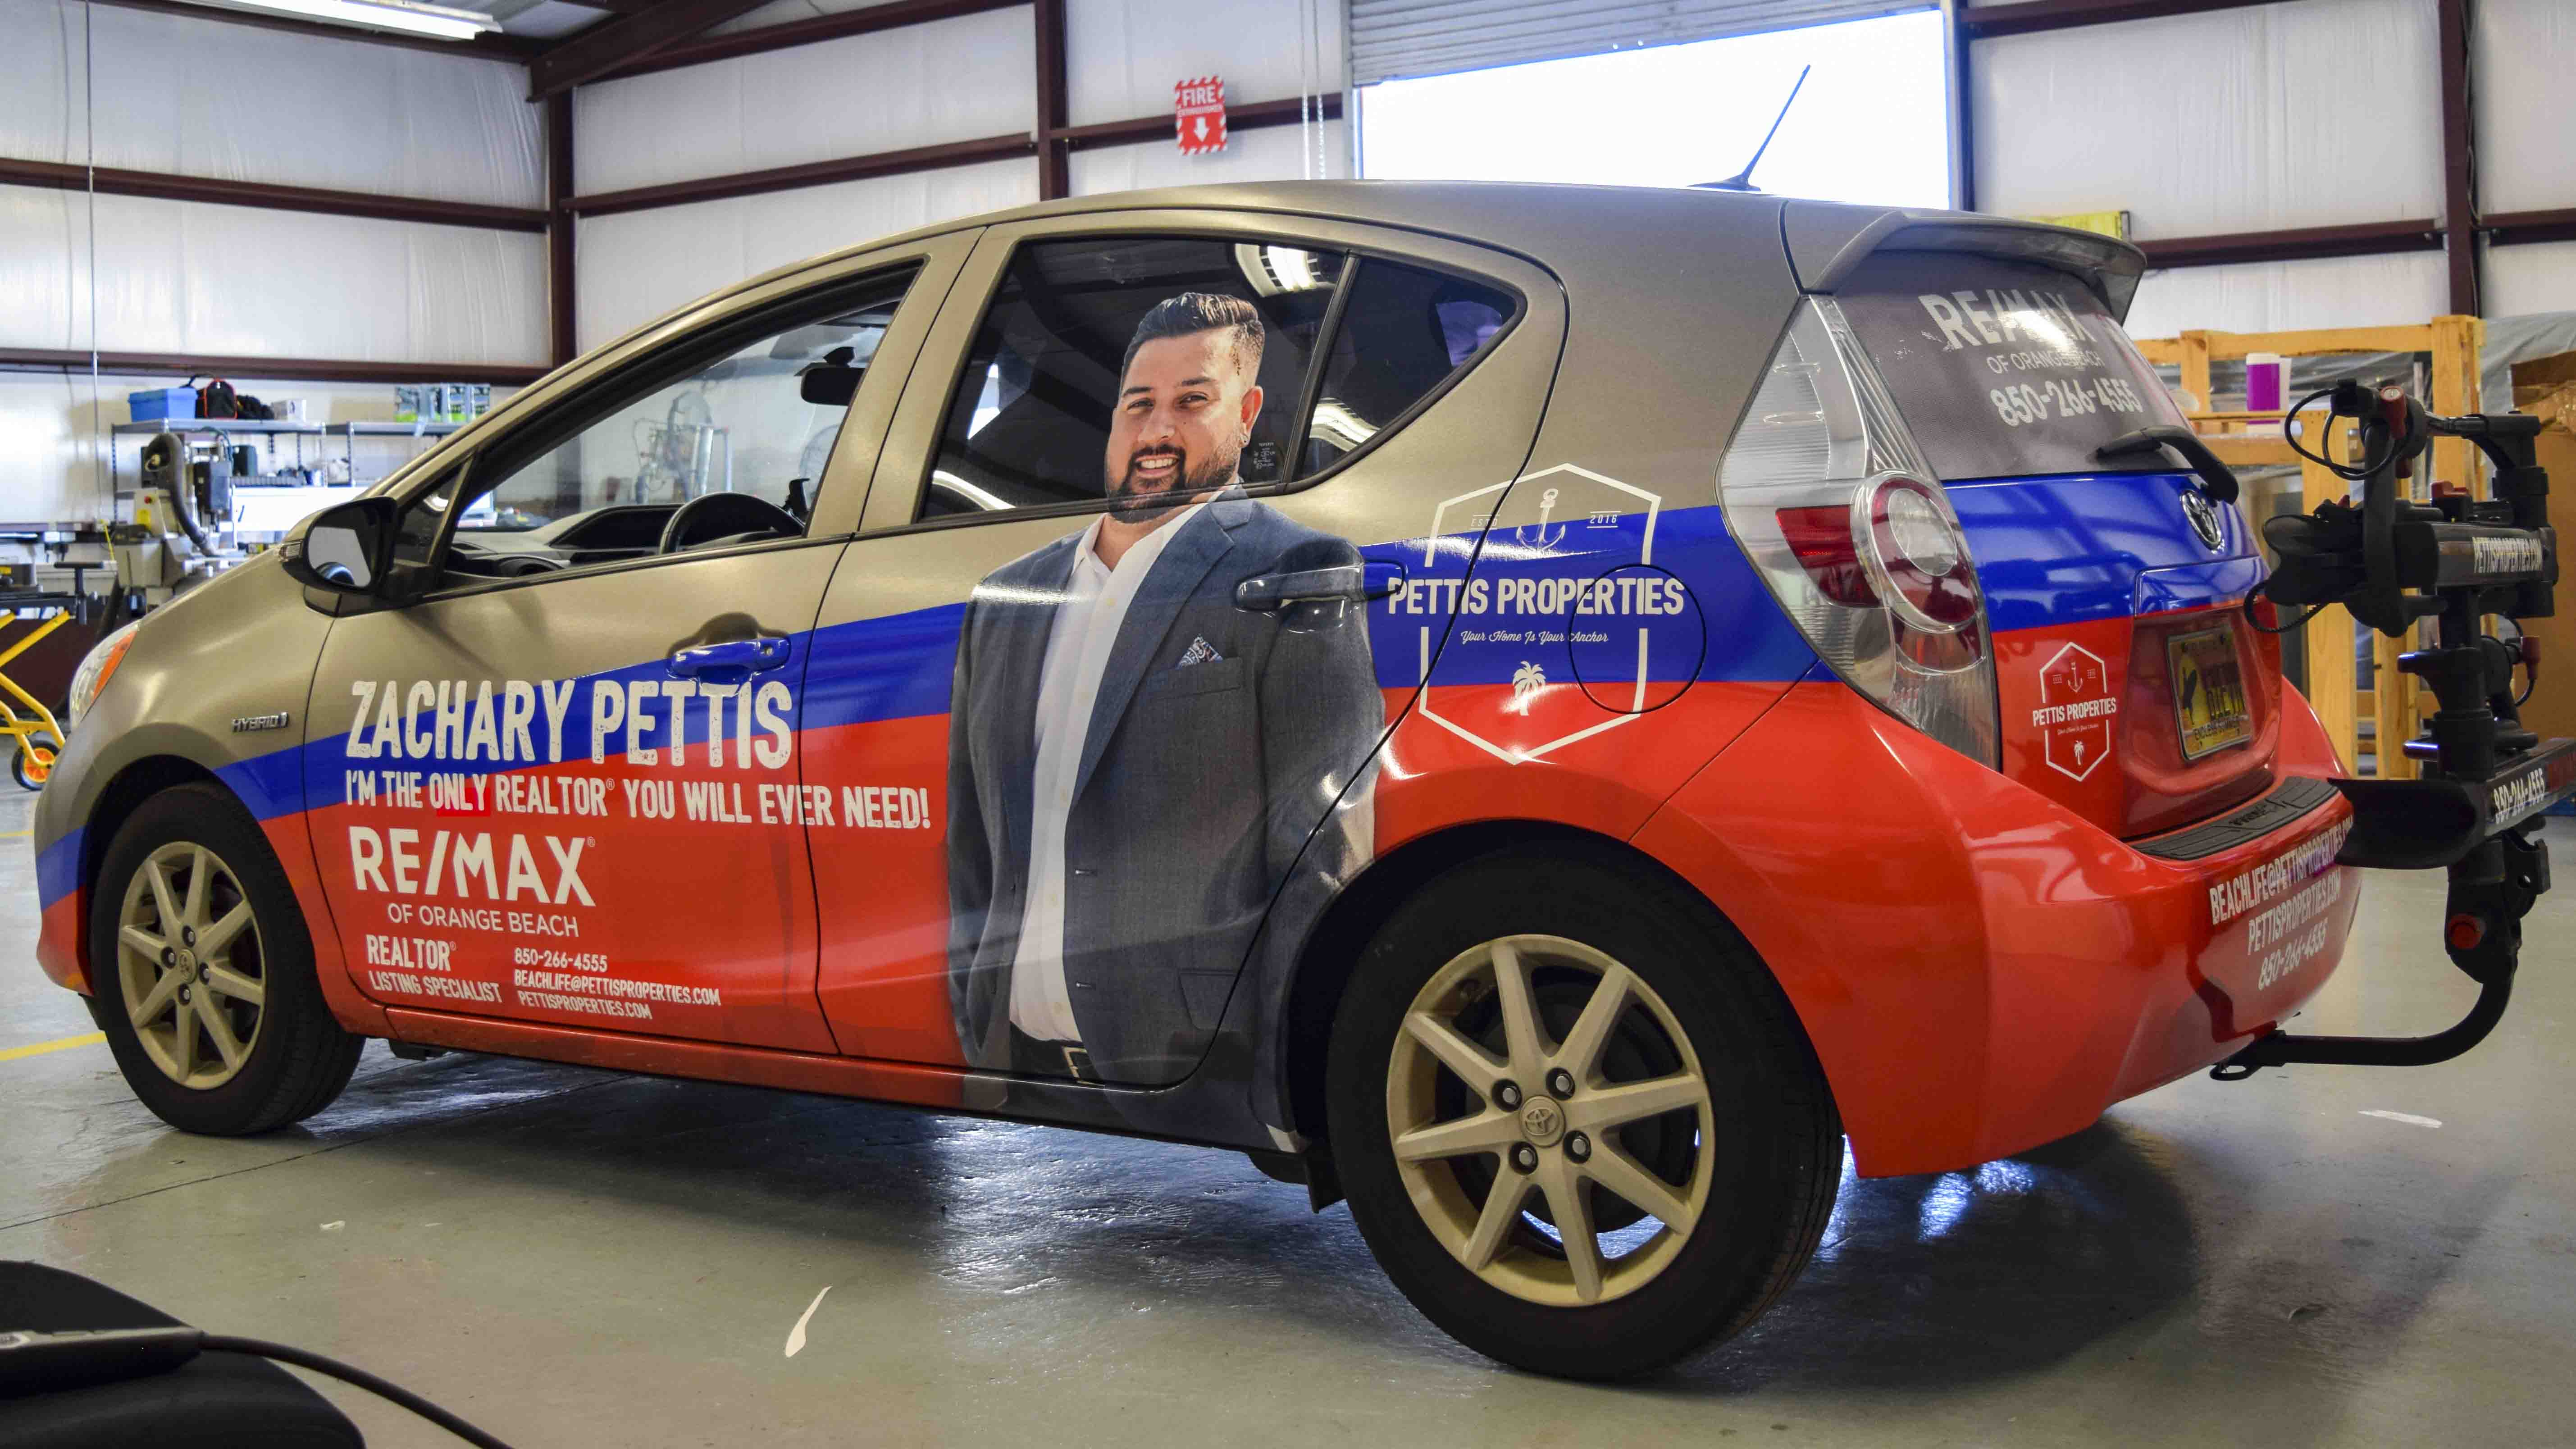 Pensacola Sign Vehicle Wraps - Car Wrap for Zachary Pettis 